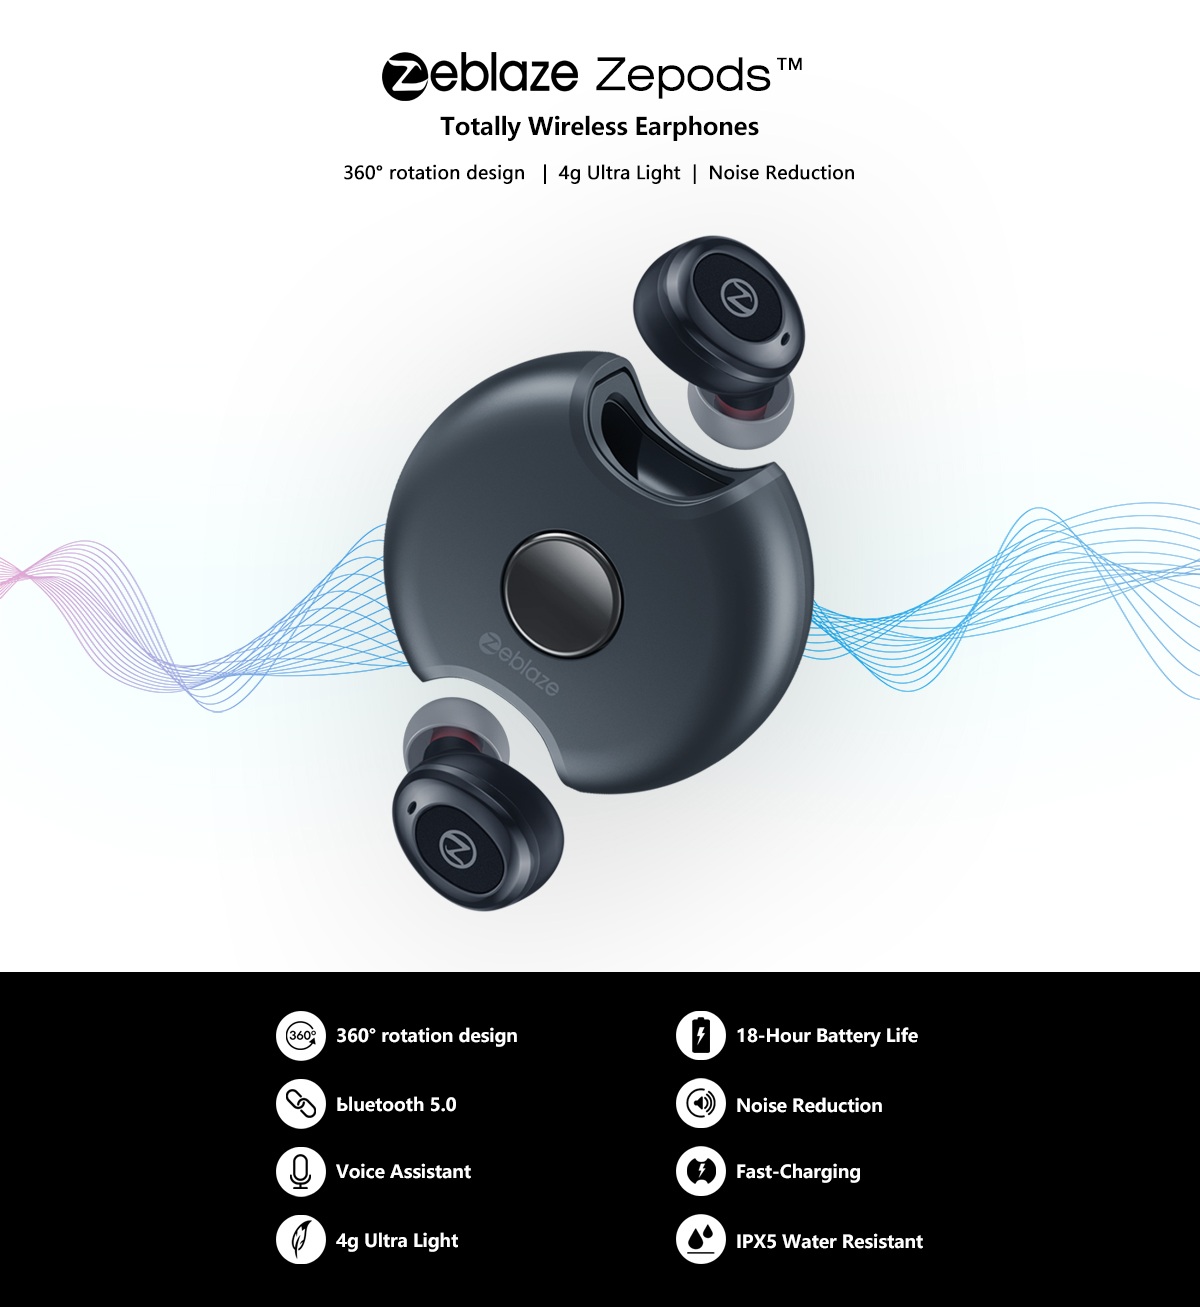 Zeblaze-Zepodstrade-Totally-Wireless-Earphone-bluetooth-50-Deep-Bass-Stereo-360-Degree-Rotation-Type-1565090-2